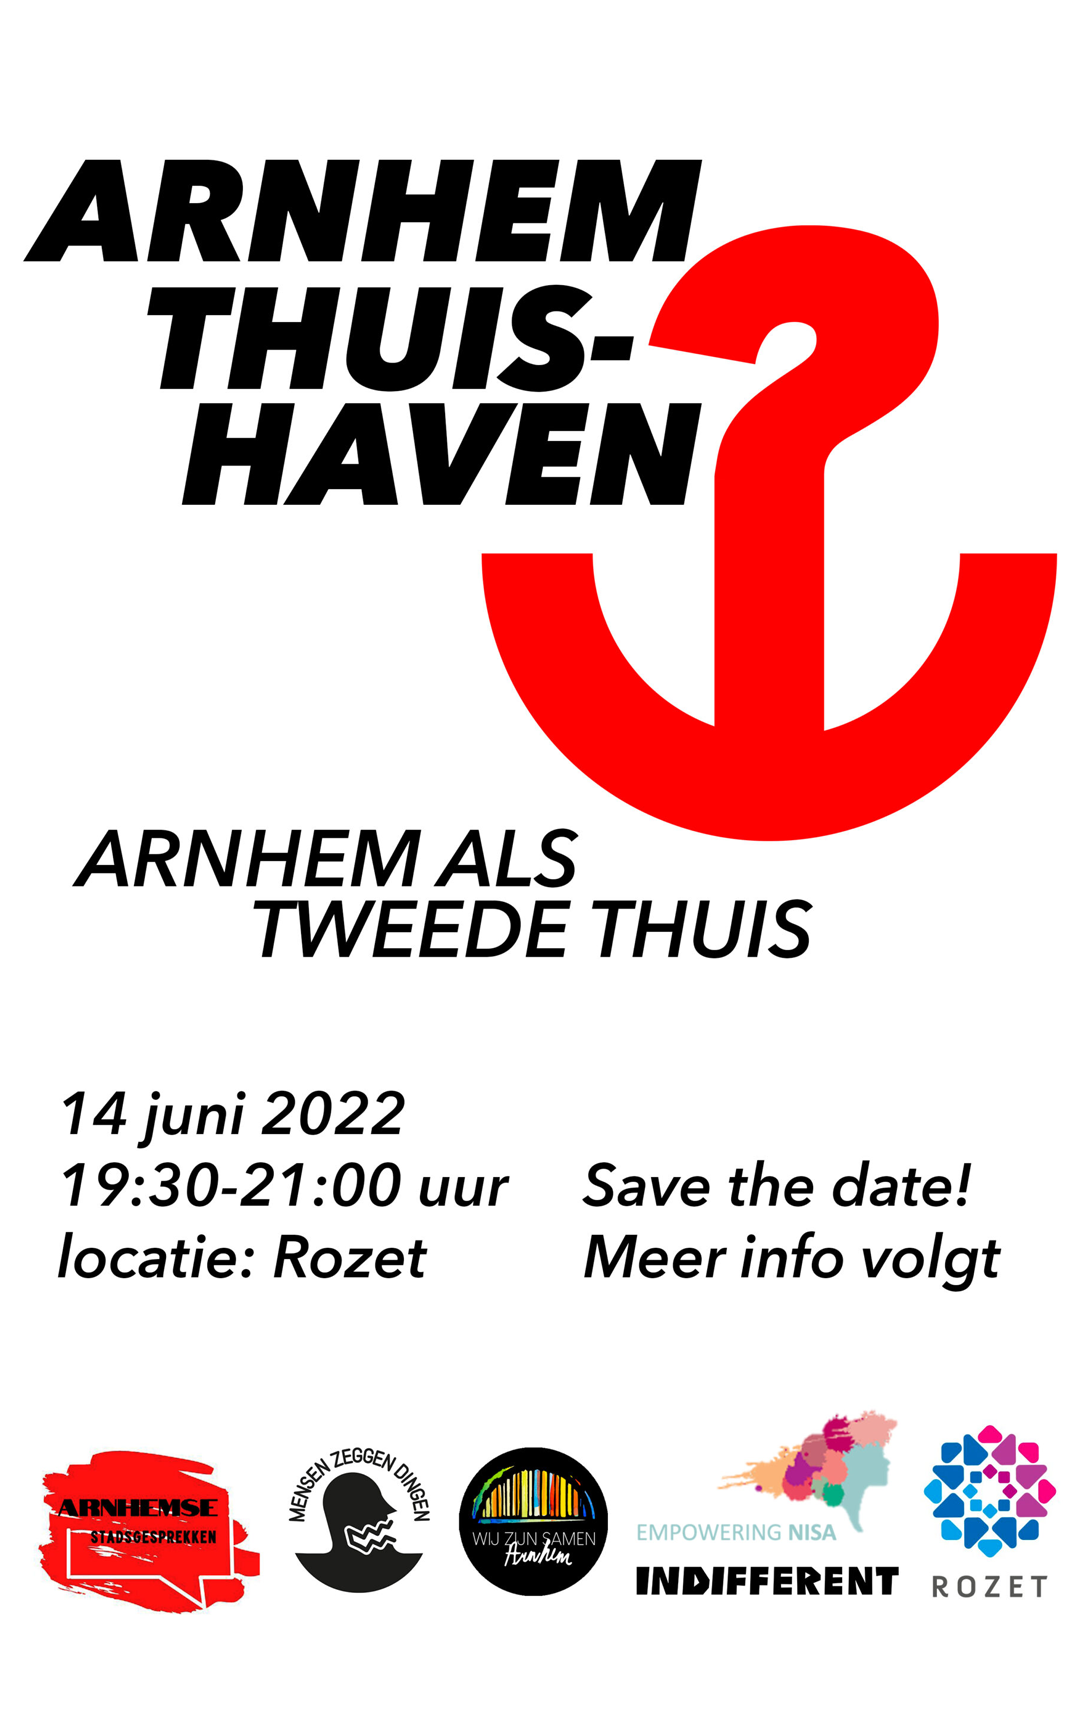 Arnhem: Thuishaven?